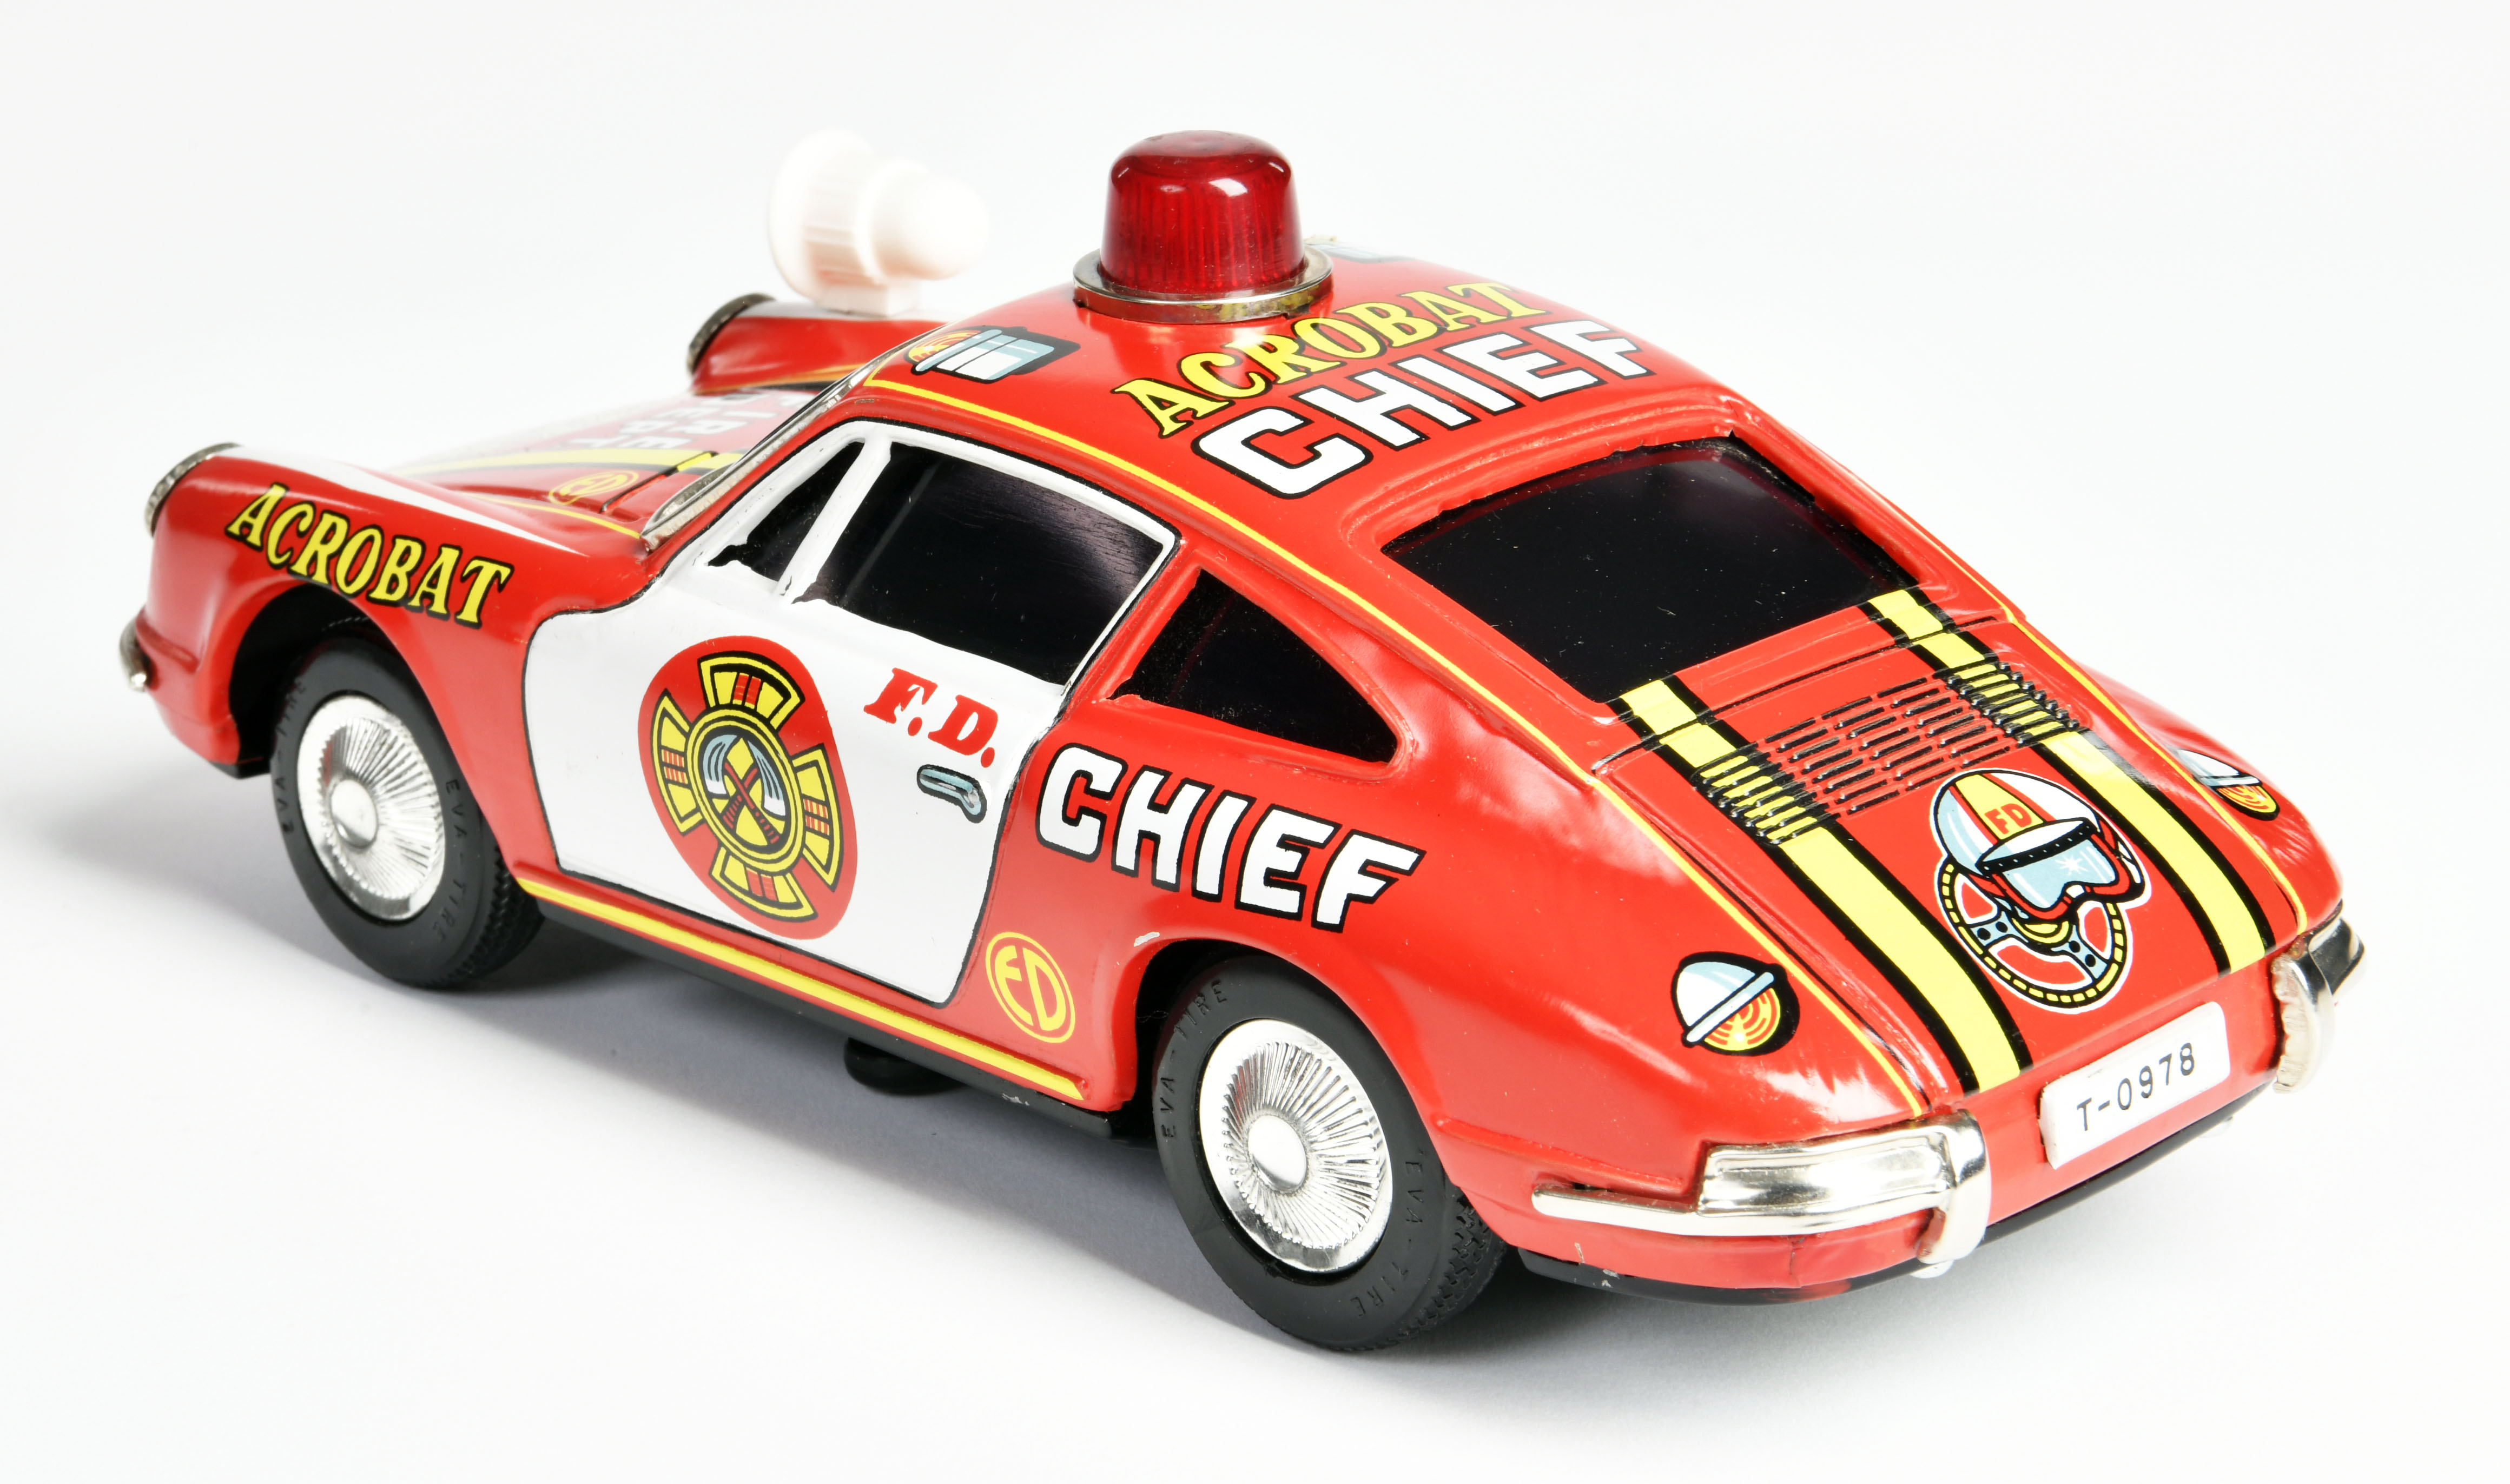 TPS, Porsche 911 Acrobat Chief, Japan, 26cm, tin, function ok, C 1 - Image 2 of 3